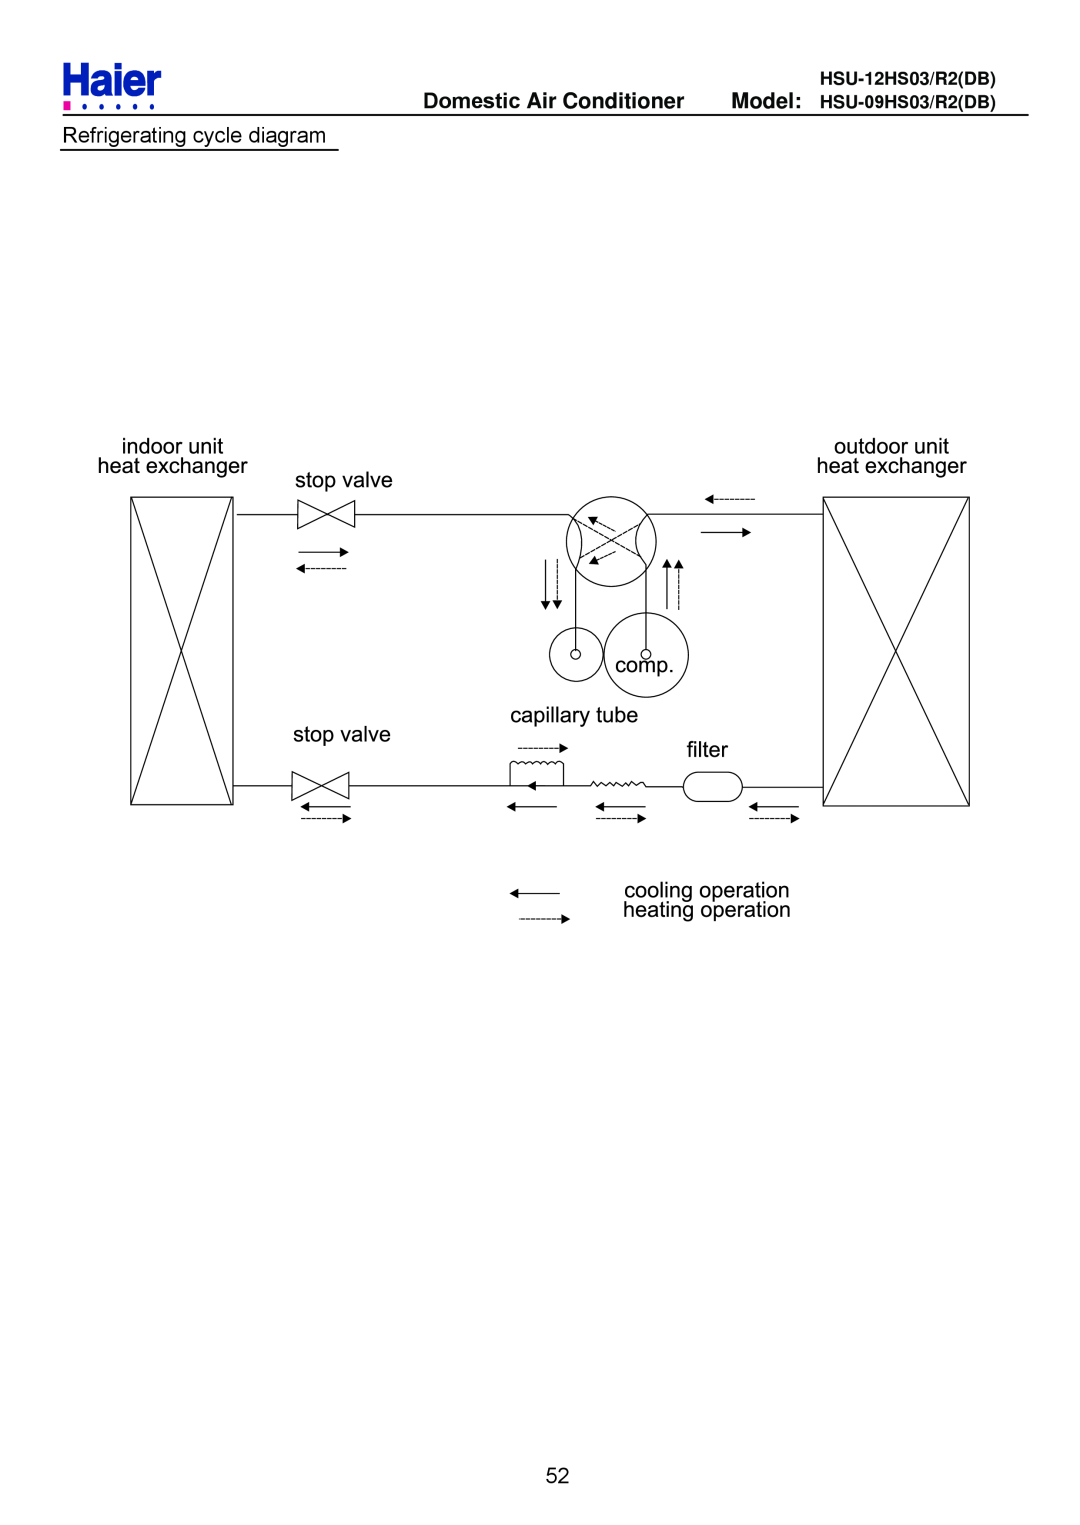 Haier service manual Domestic Air Conditioner, Refrigerating cycle diagram, HSU-12HS03/R2DB, Model HSU-09HS03/R2DB 